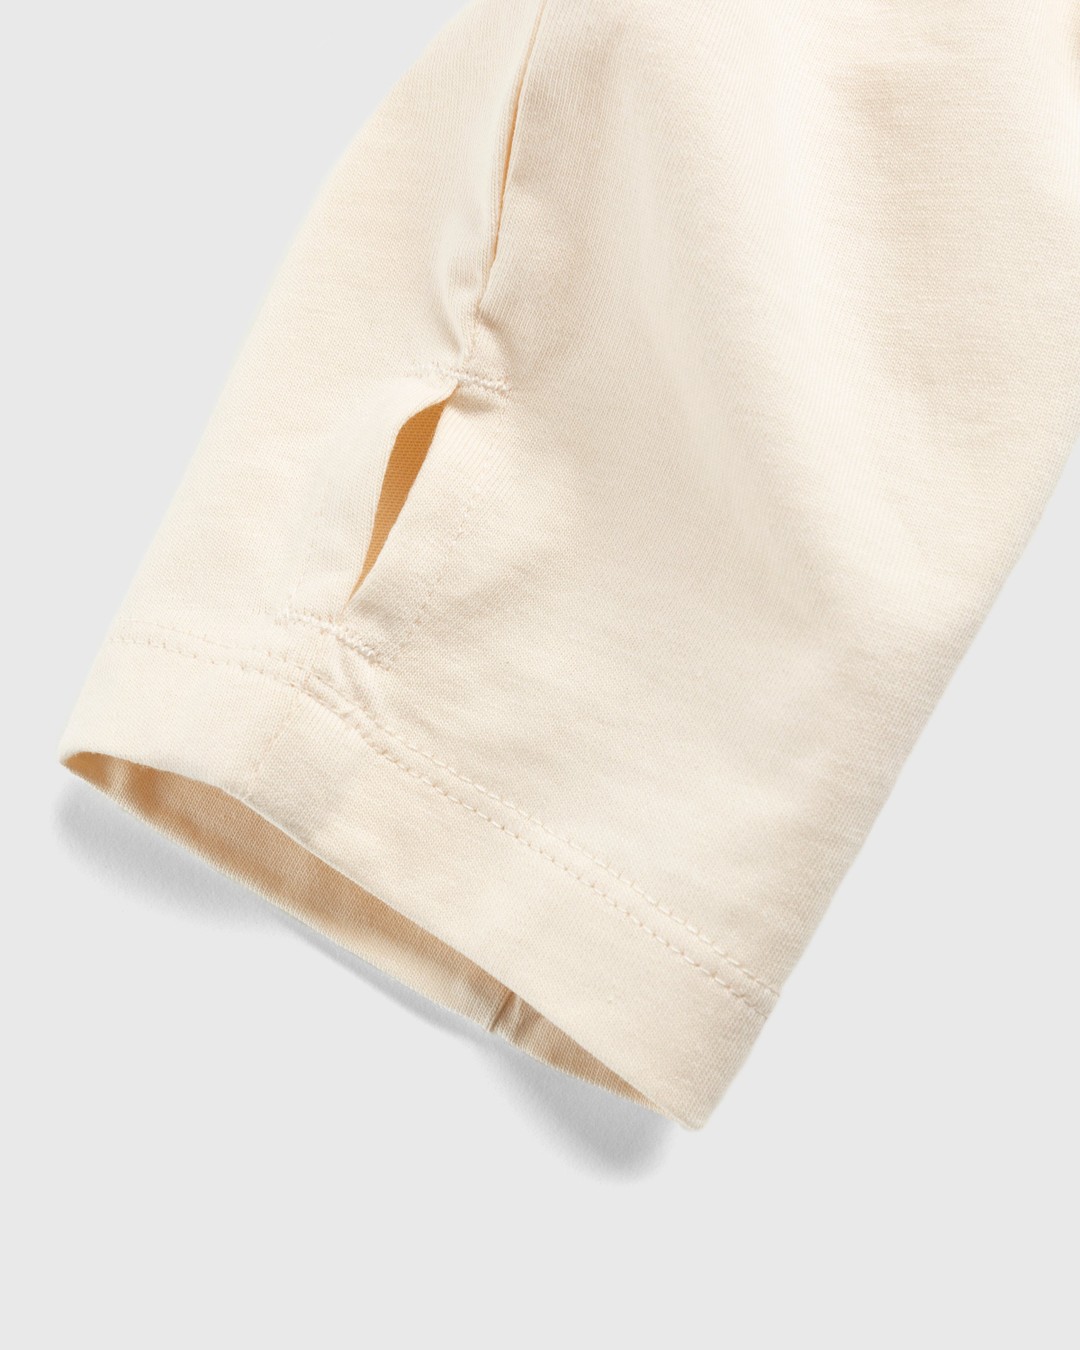 Marine Serre – Organic Cotton Relaxed Long-Sleeve Top Beige - Longsleeves - Beige - Image 3